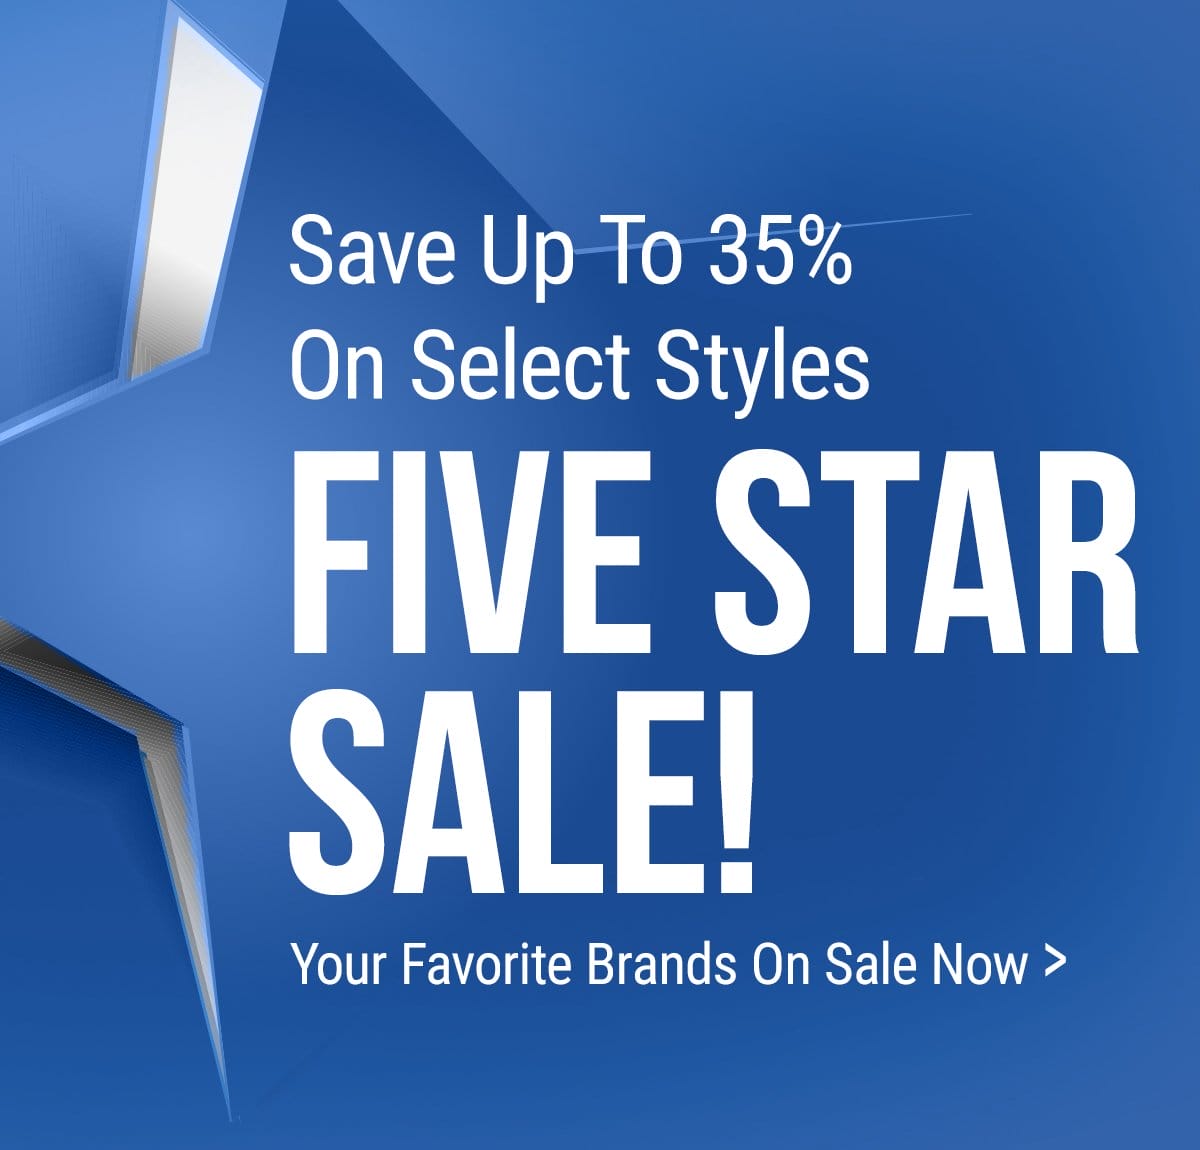 5 Star Sale >